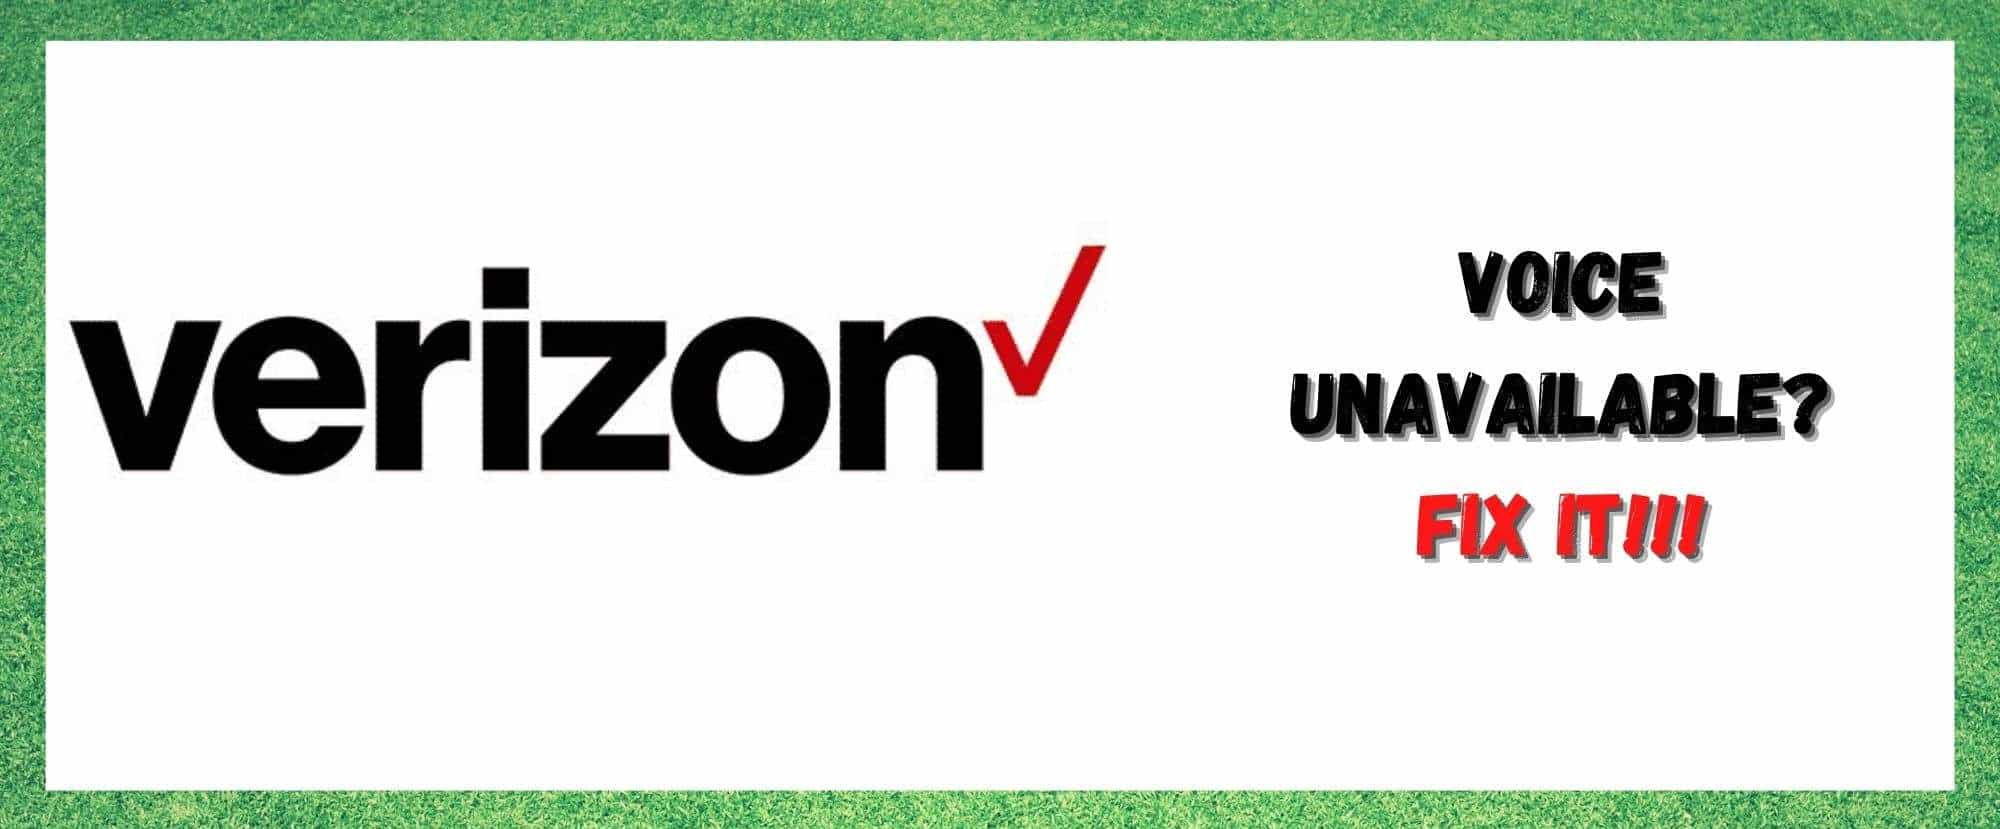 Verizon ভয়েসমেল অনুপলব্ধ ঠিক করার 6 উপায়: অ্যাক্সেস অনুমোদন করা যায়নি